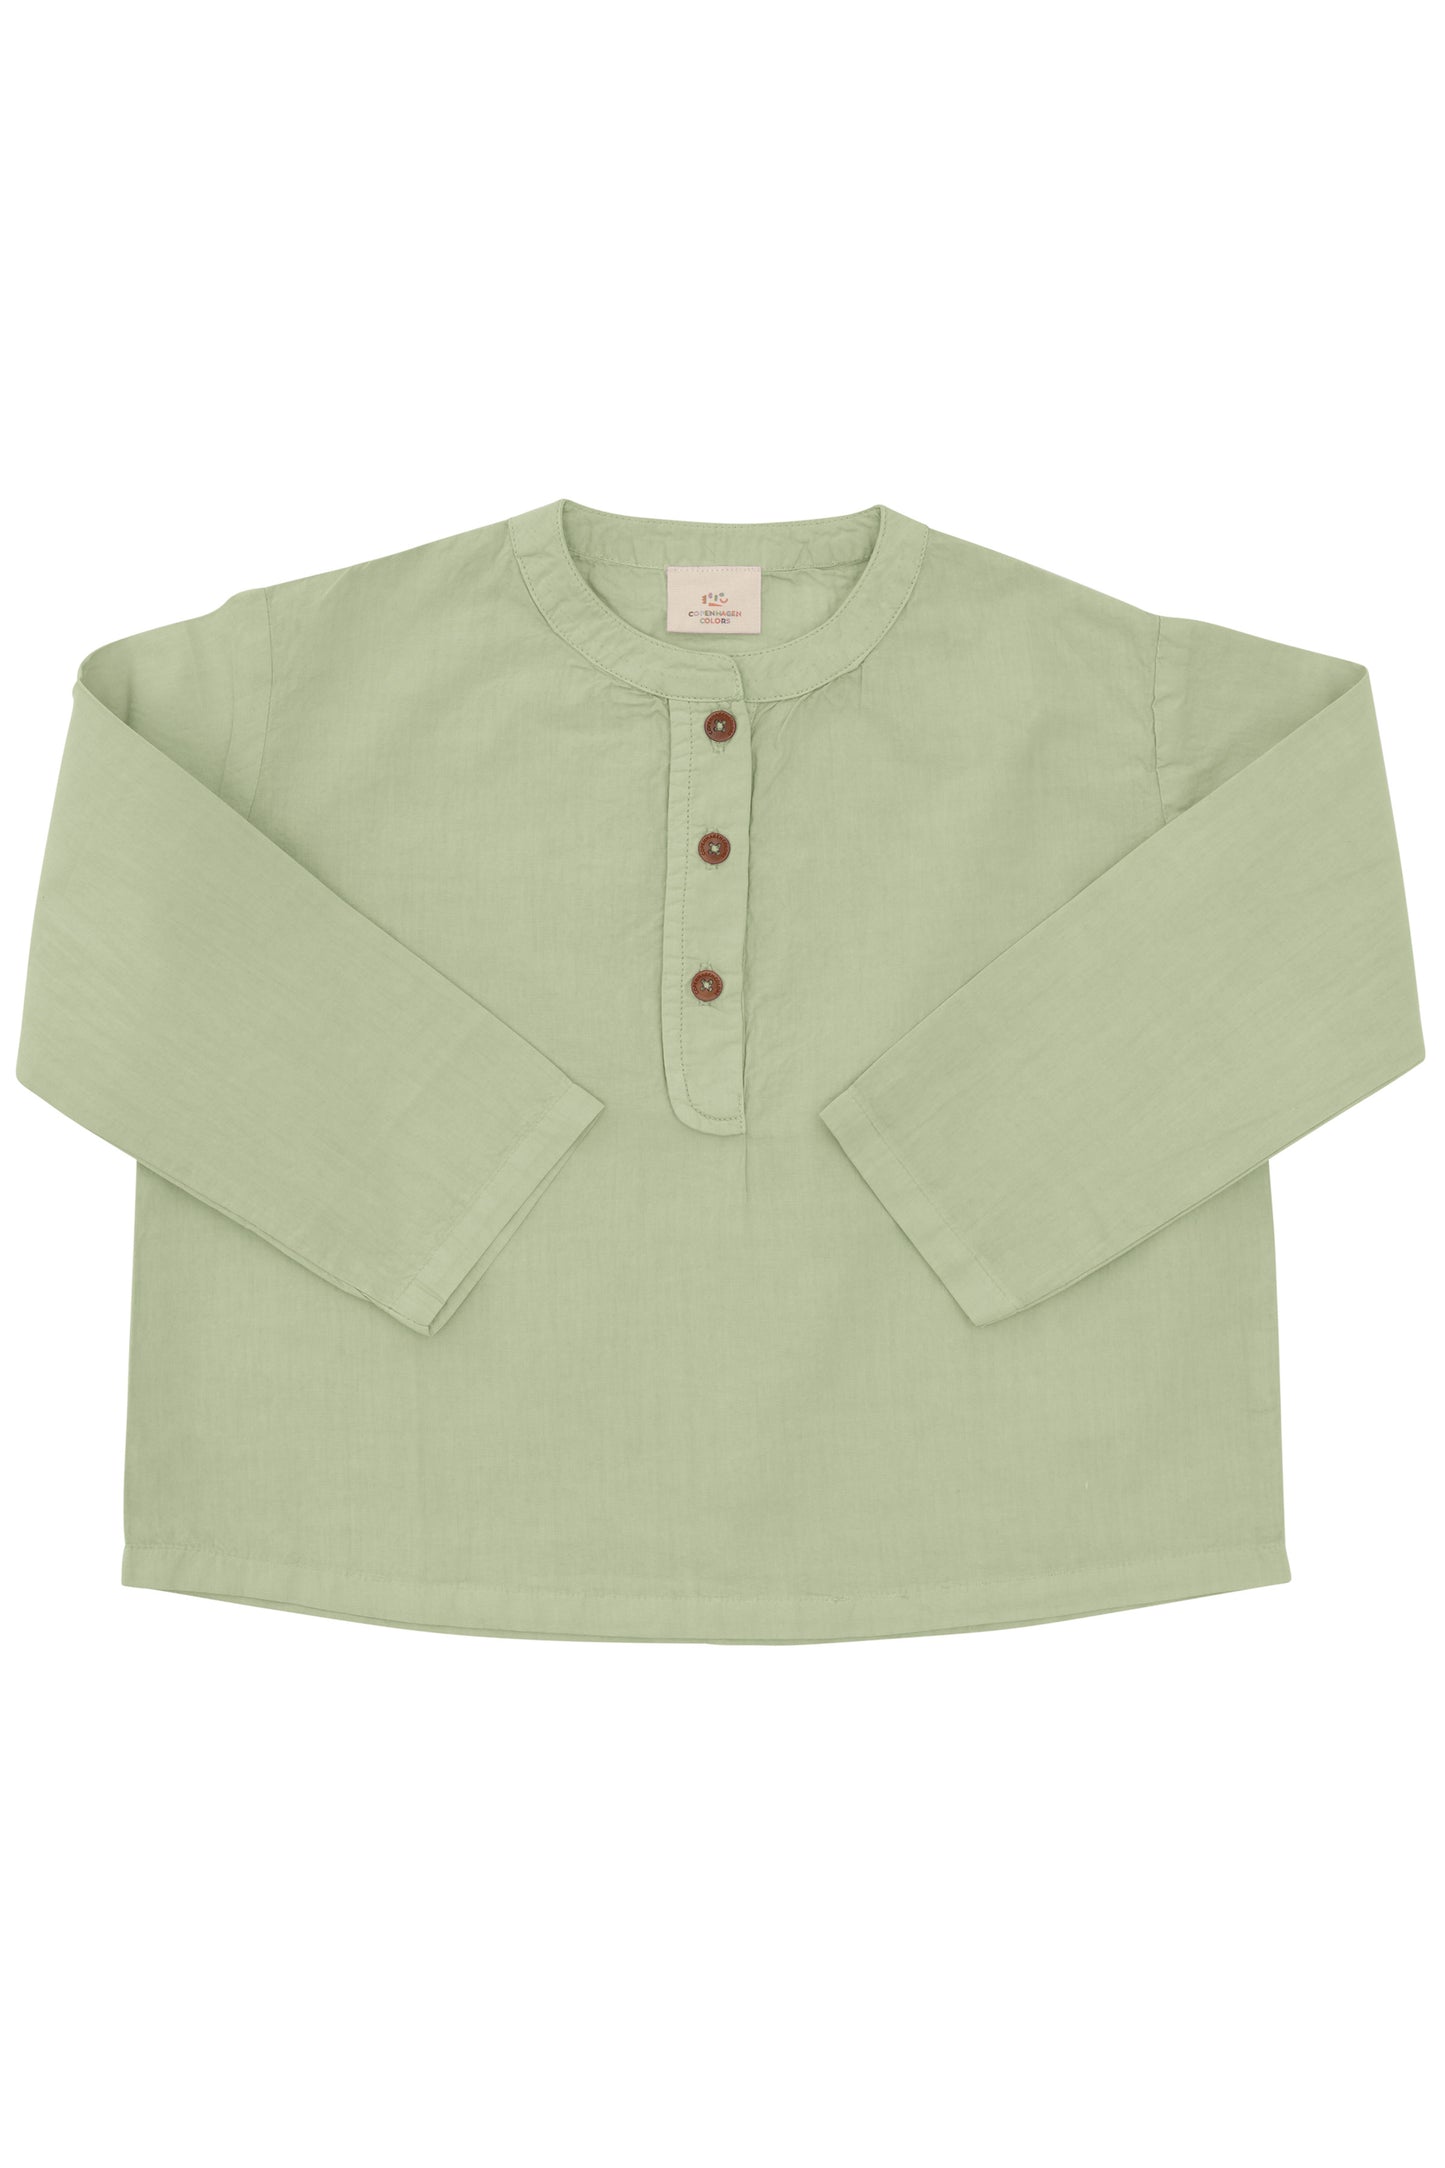 Tuniek hemd Copenhagen Colors 100% organisch katoen fairtrade gemaakt babykleding duurzame kinderkleding sustainable kids clothing